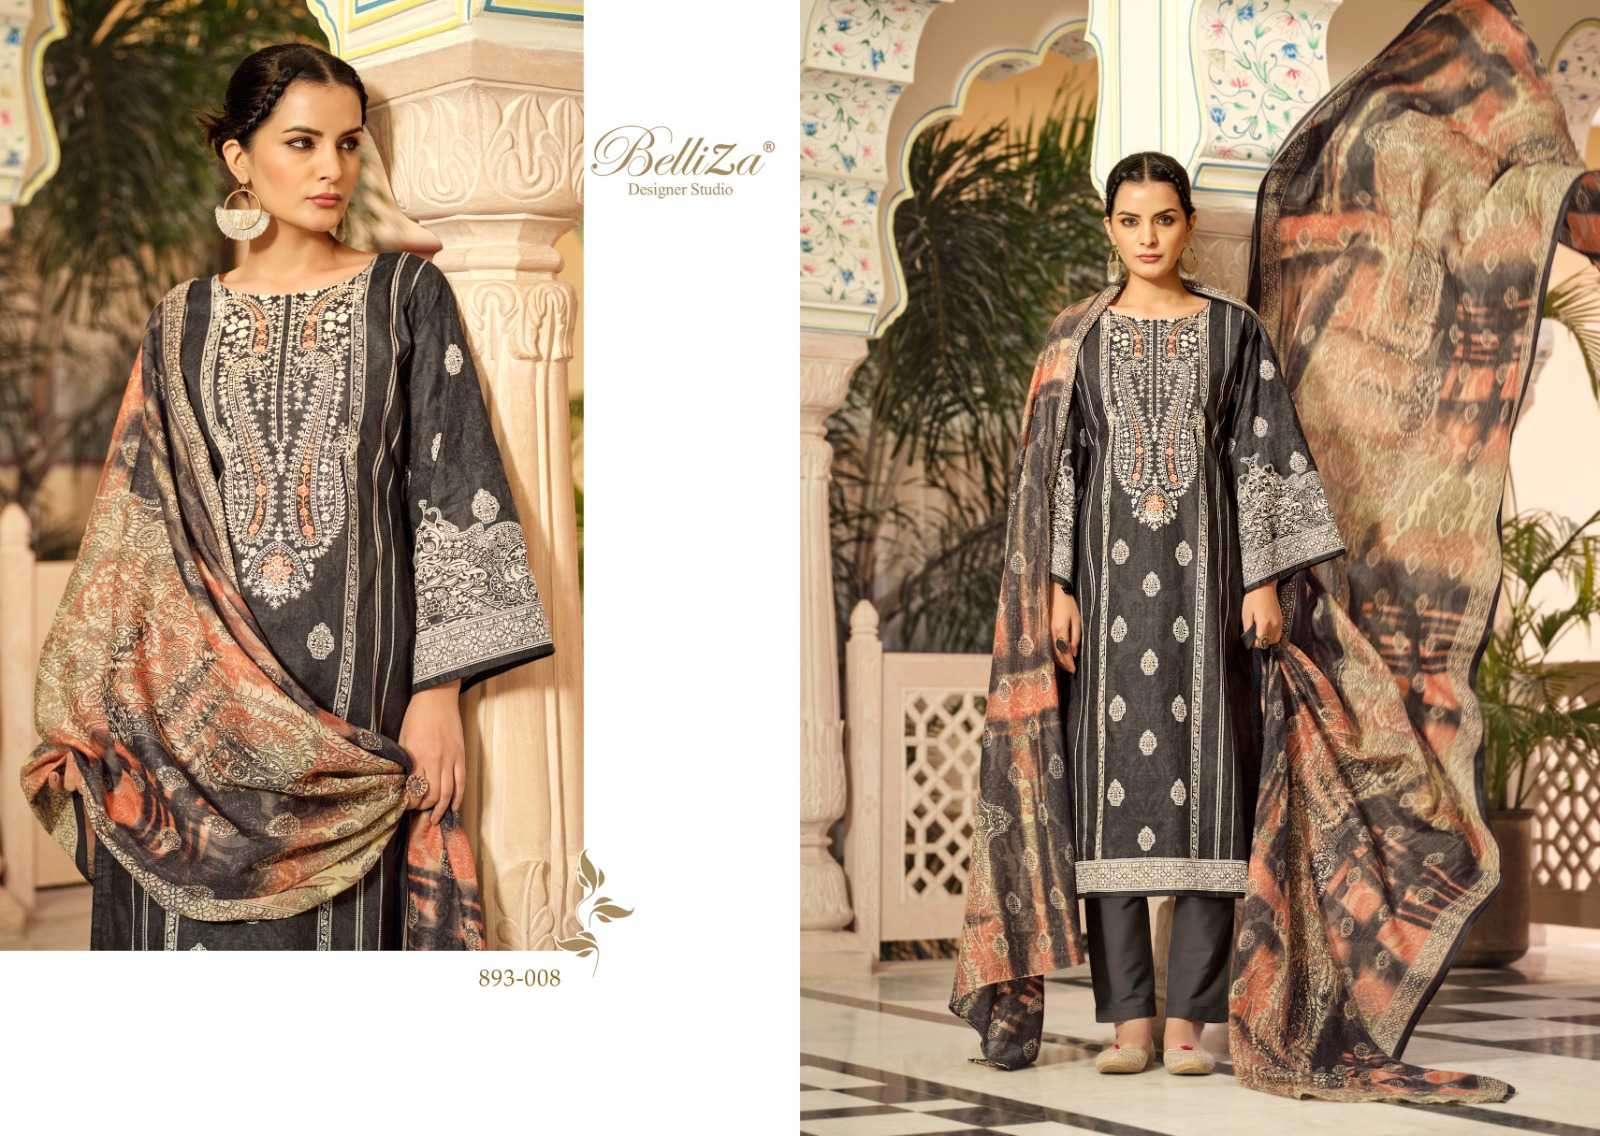 Belliza Designer Studio Naira Vol 41 Cotton With Embroidery Work Salwar Suits Manufacturer In Surat